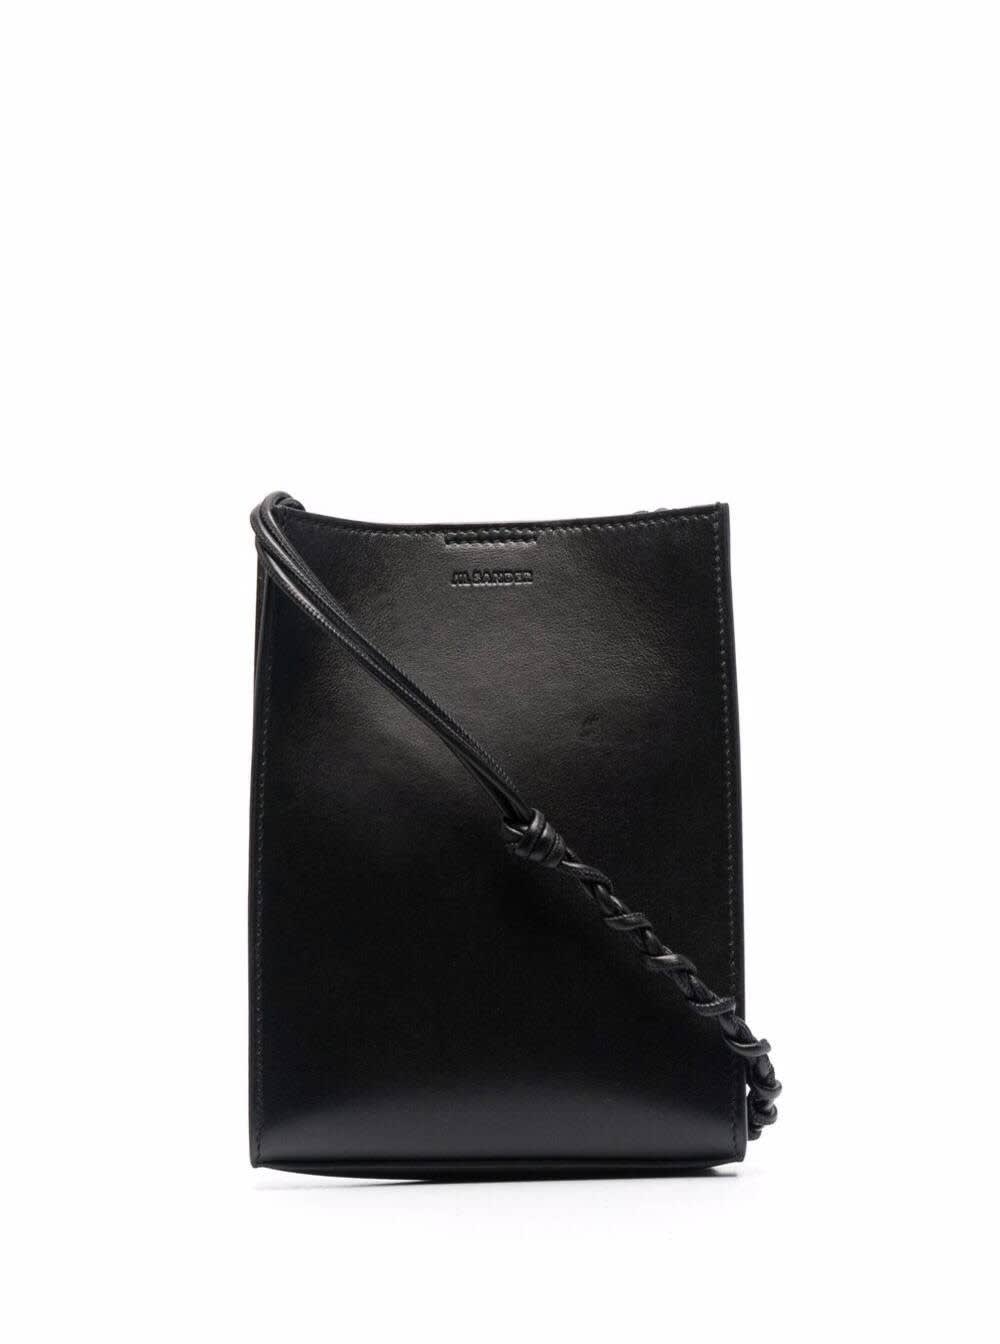 Jil Sander Tangle Small Black Crossbody Bag In Black Leather